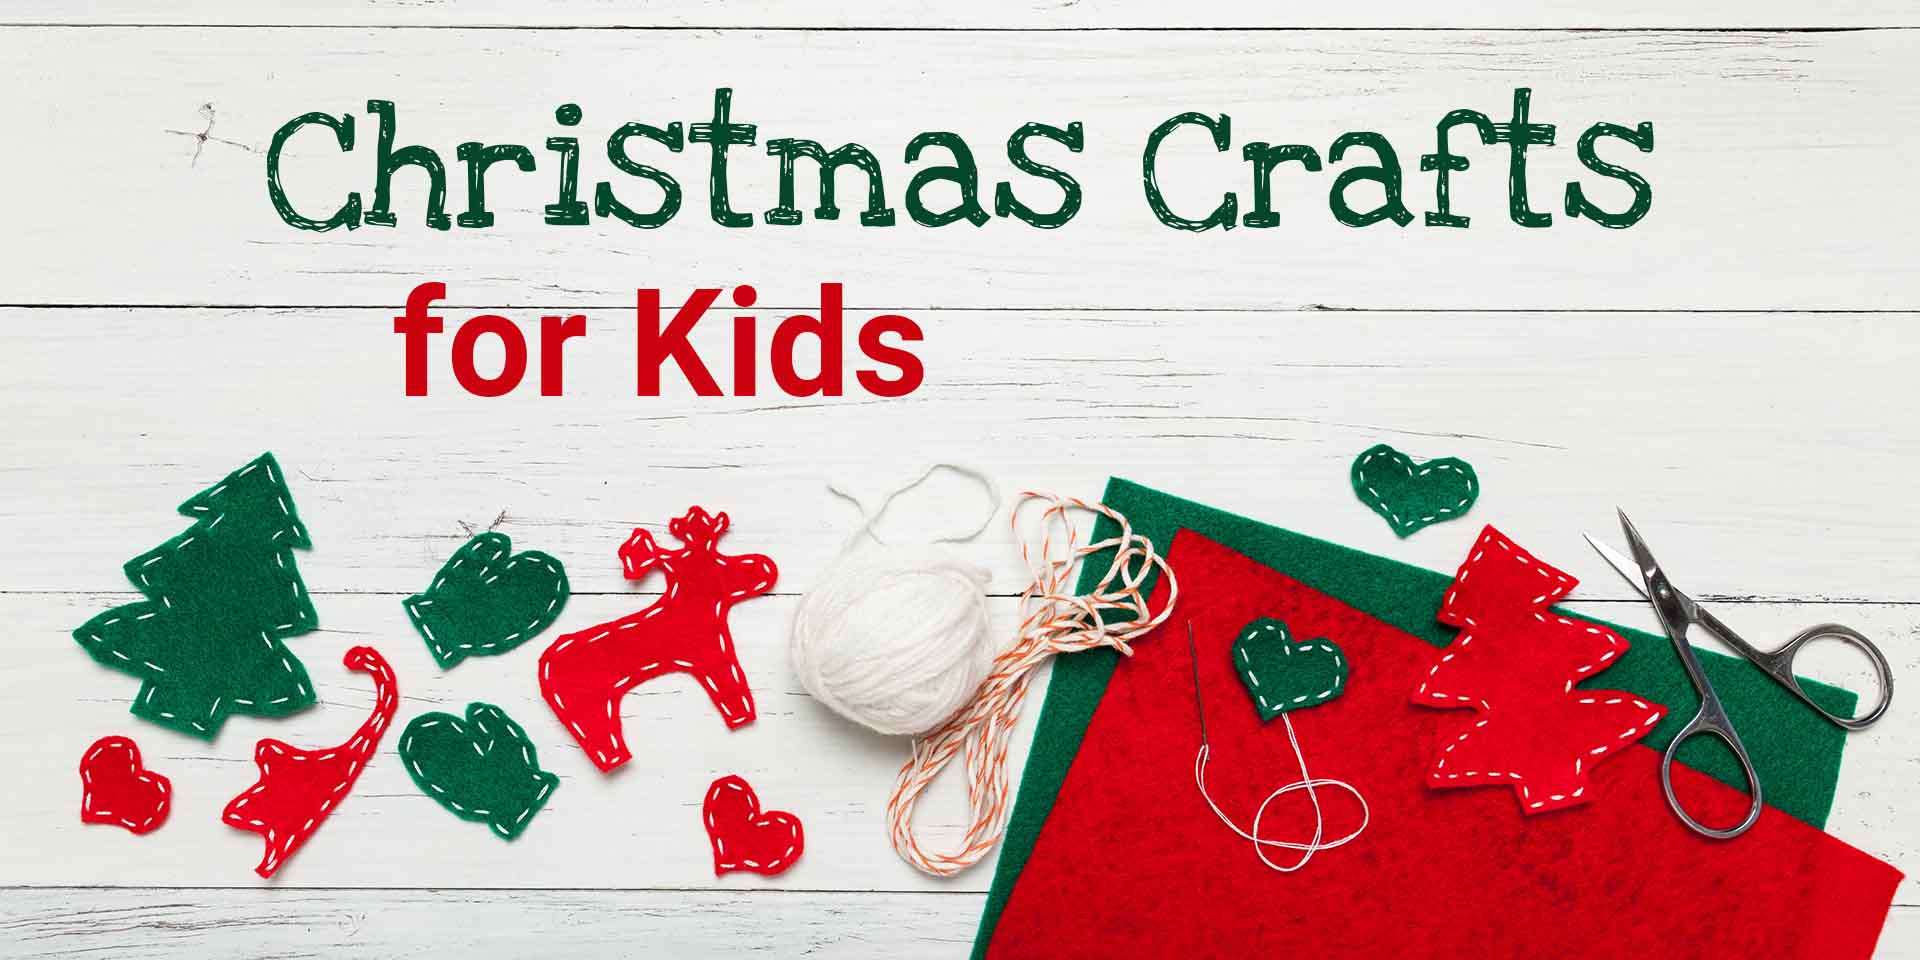 Christmas Craft Kit - Mommy & Me Art Holiday Box